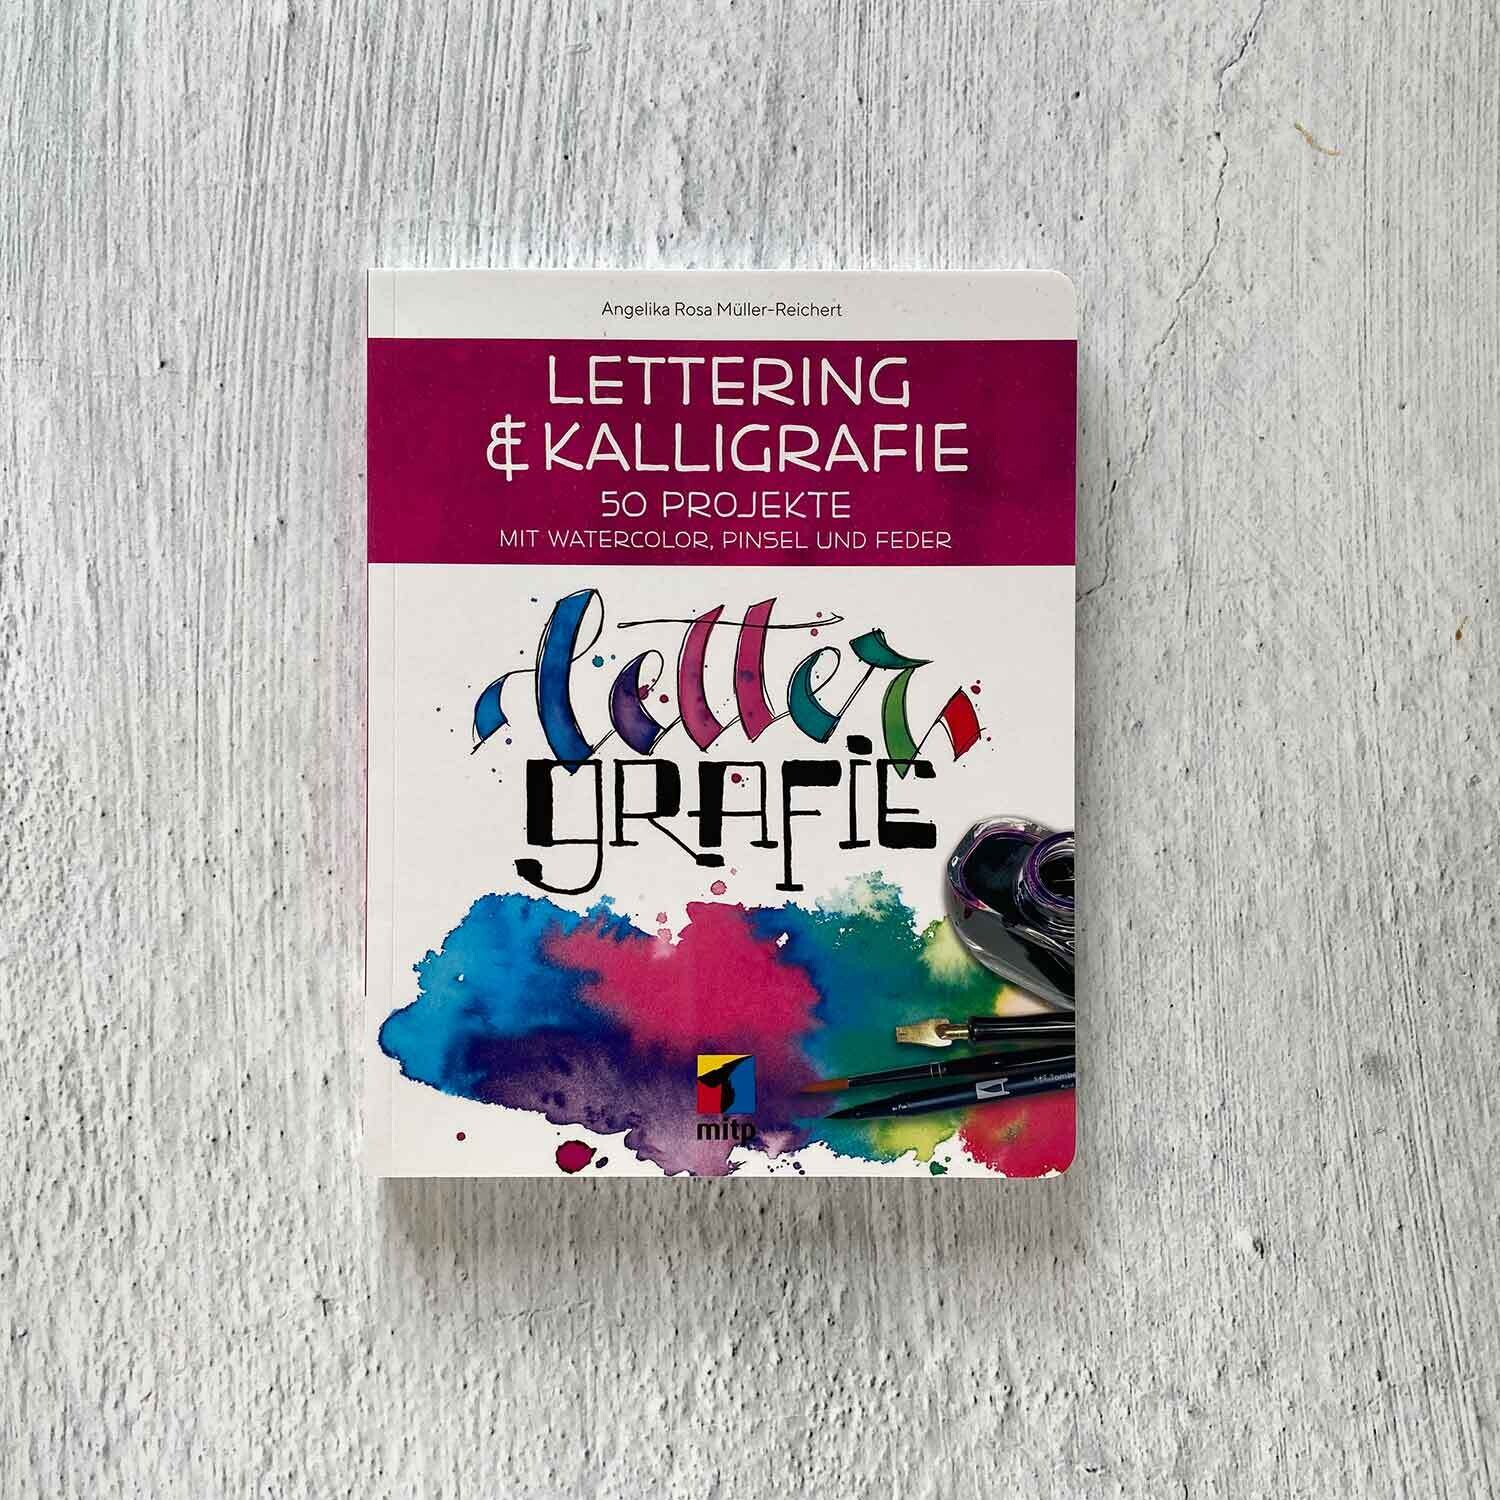 Lettering & Kalligrafie: Lettergrafie: 50 Projekte mit Watercolor, Pinsel und Feder